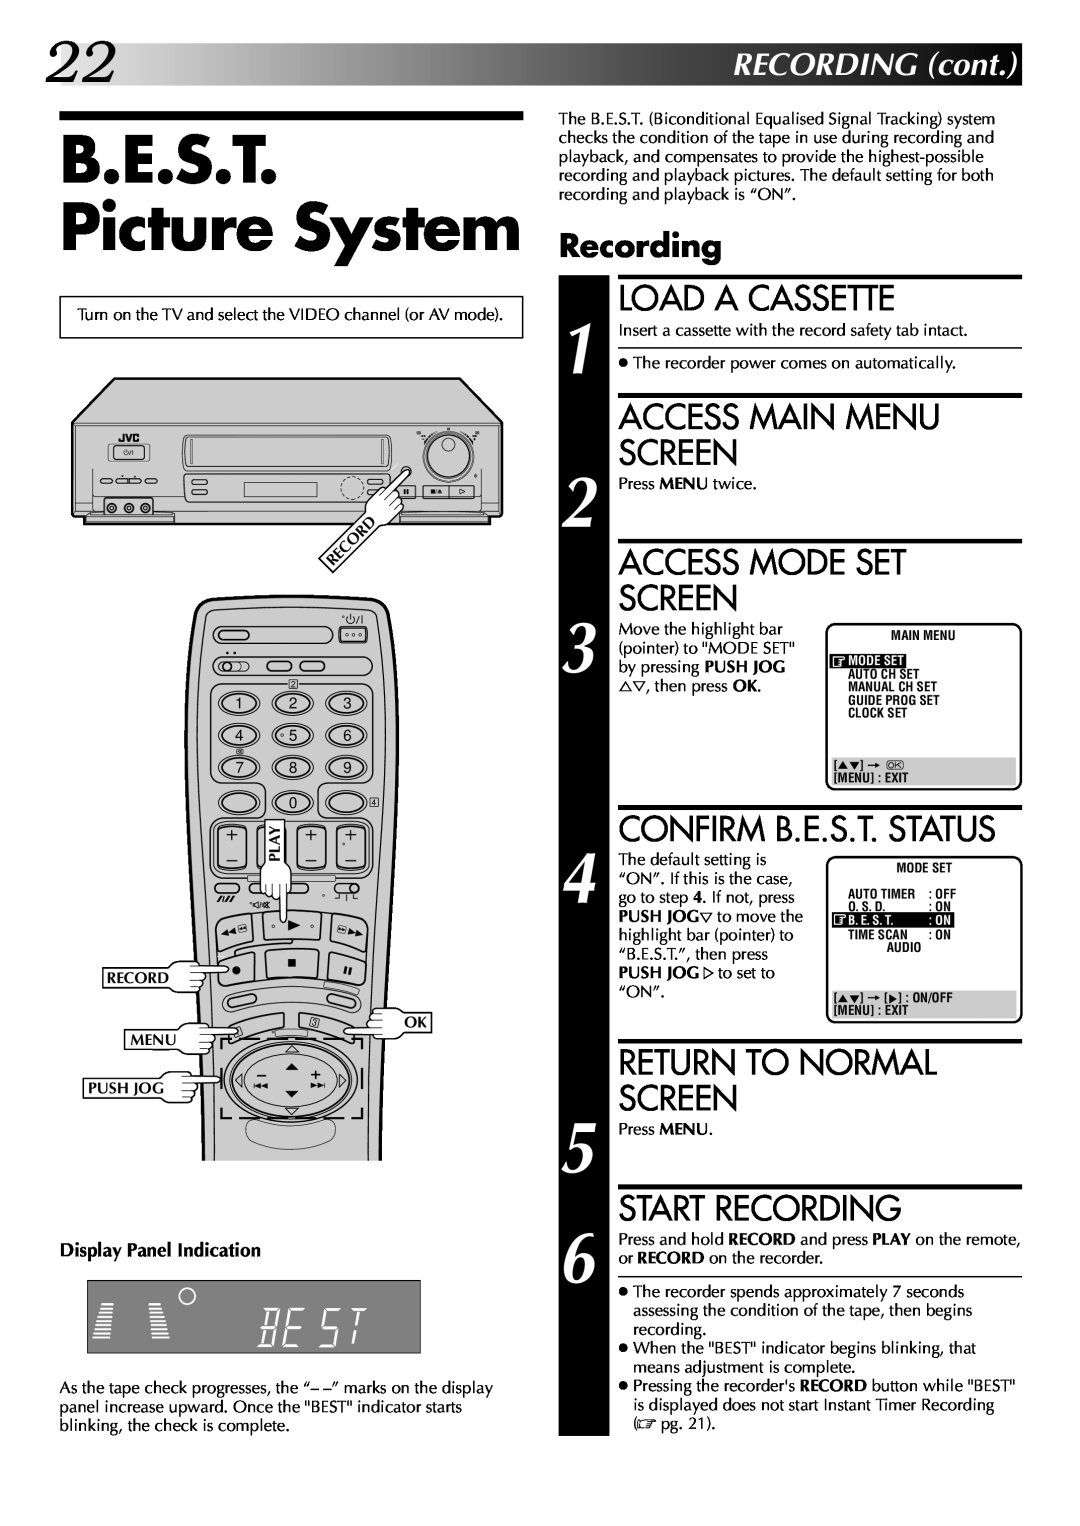 JVC HR-DD845EK B.E.S.T. Picture System, Load A Cassette, Access Main Menu, Return To Normal, Start Recording, Screen 